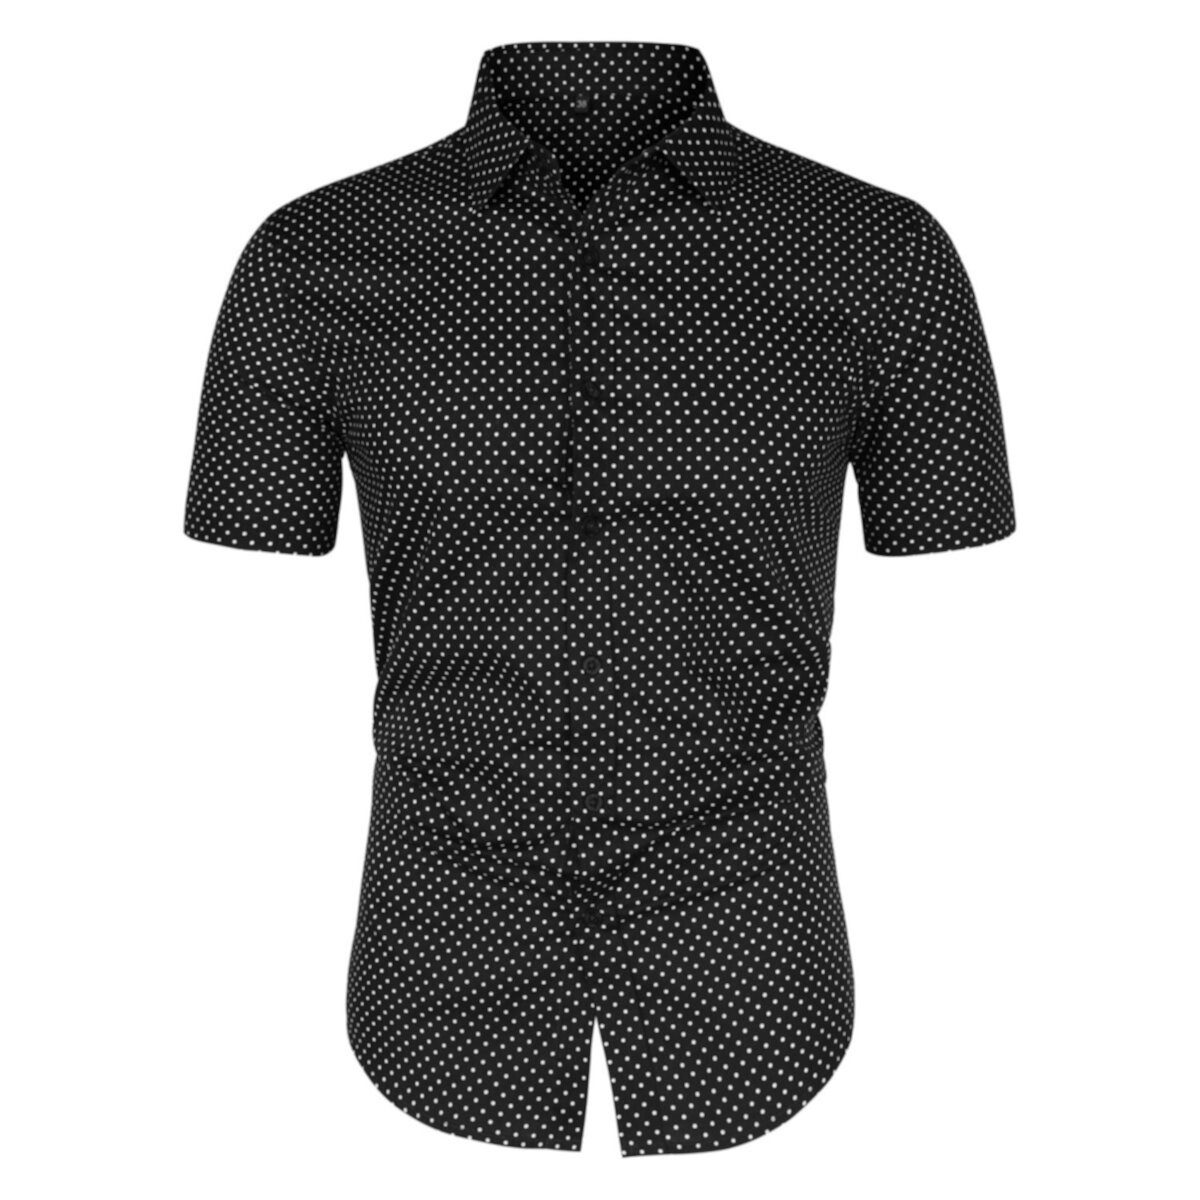 Men's Short Sleeves Polka Dots Button Down Shirt Lars Amadeus